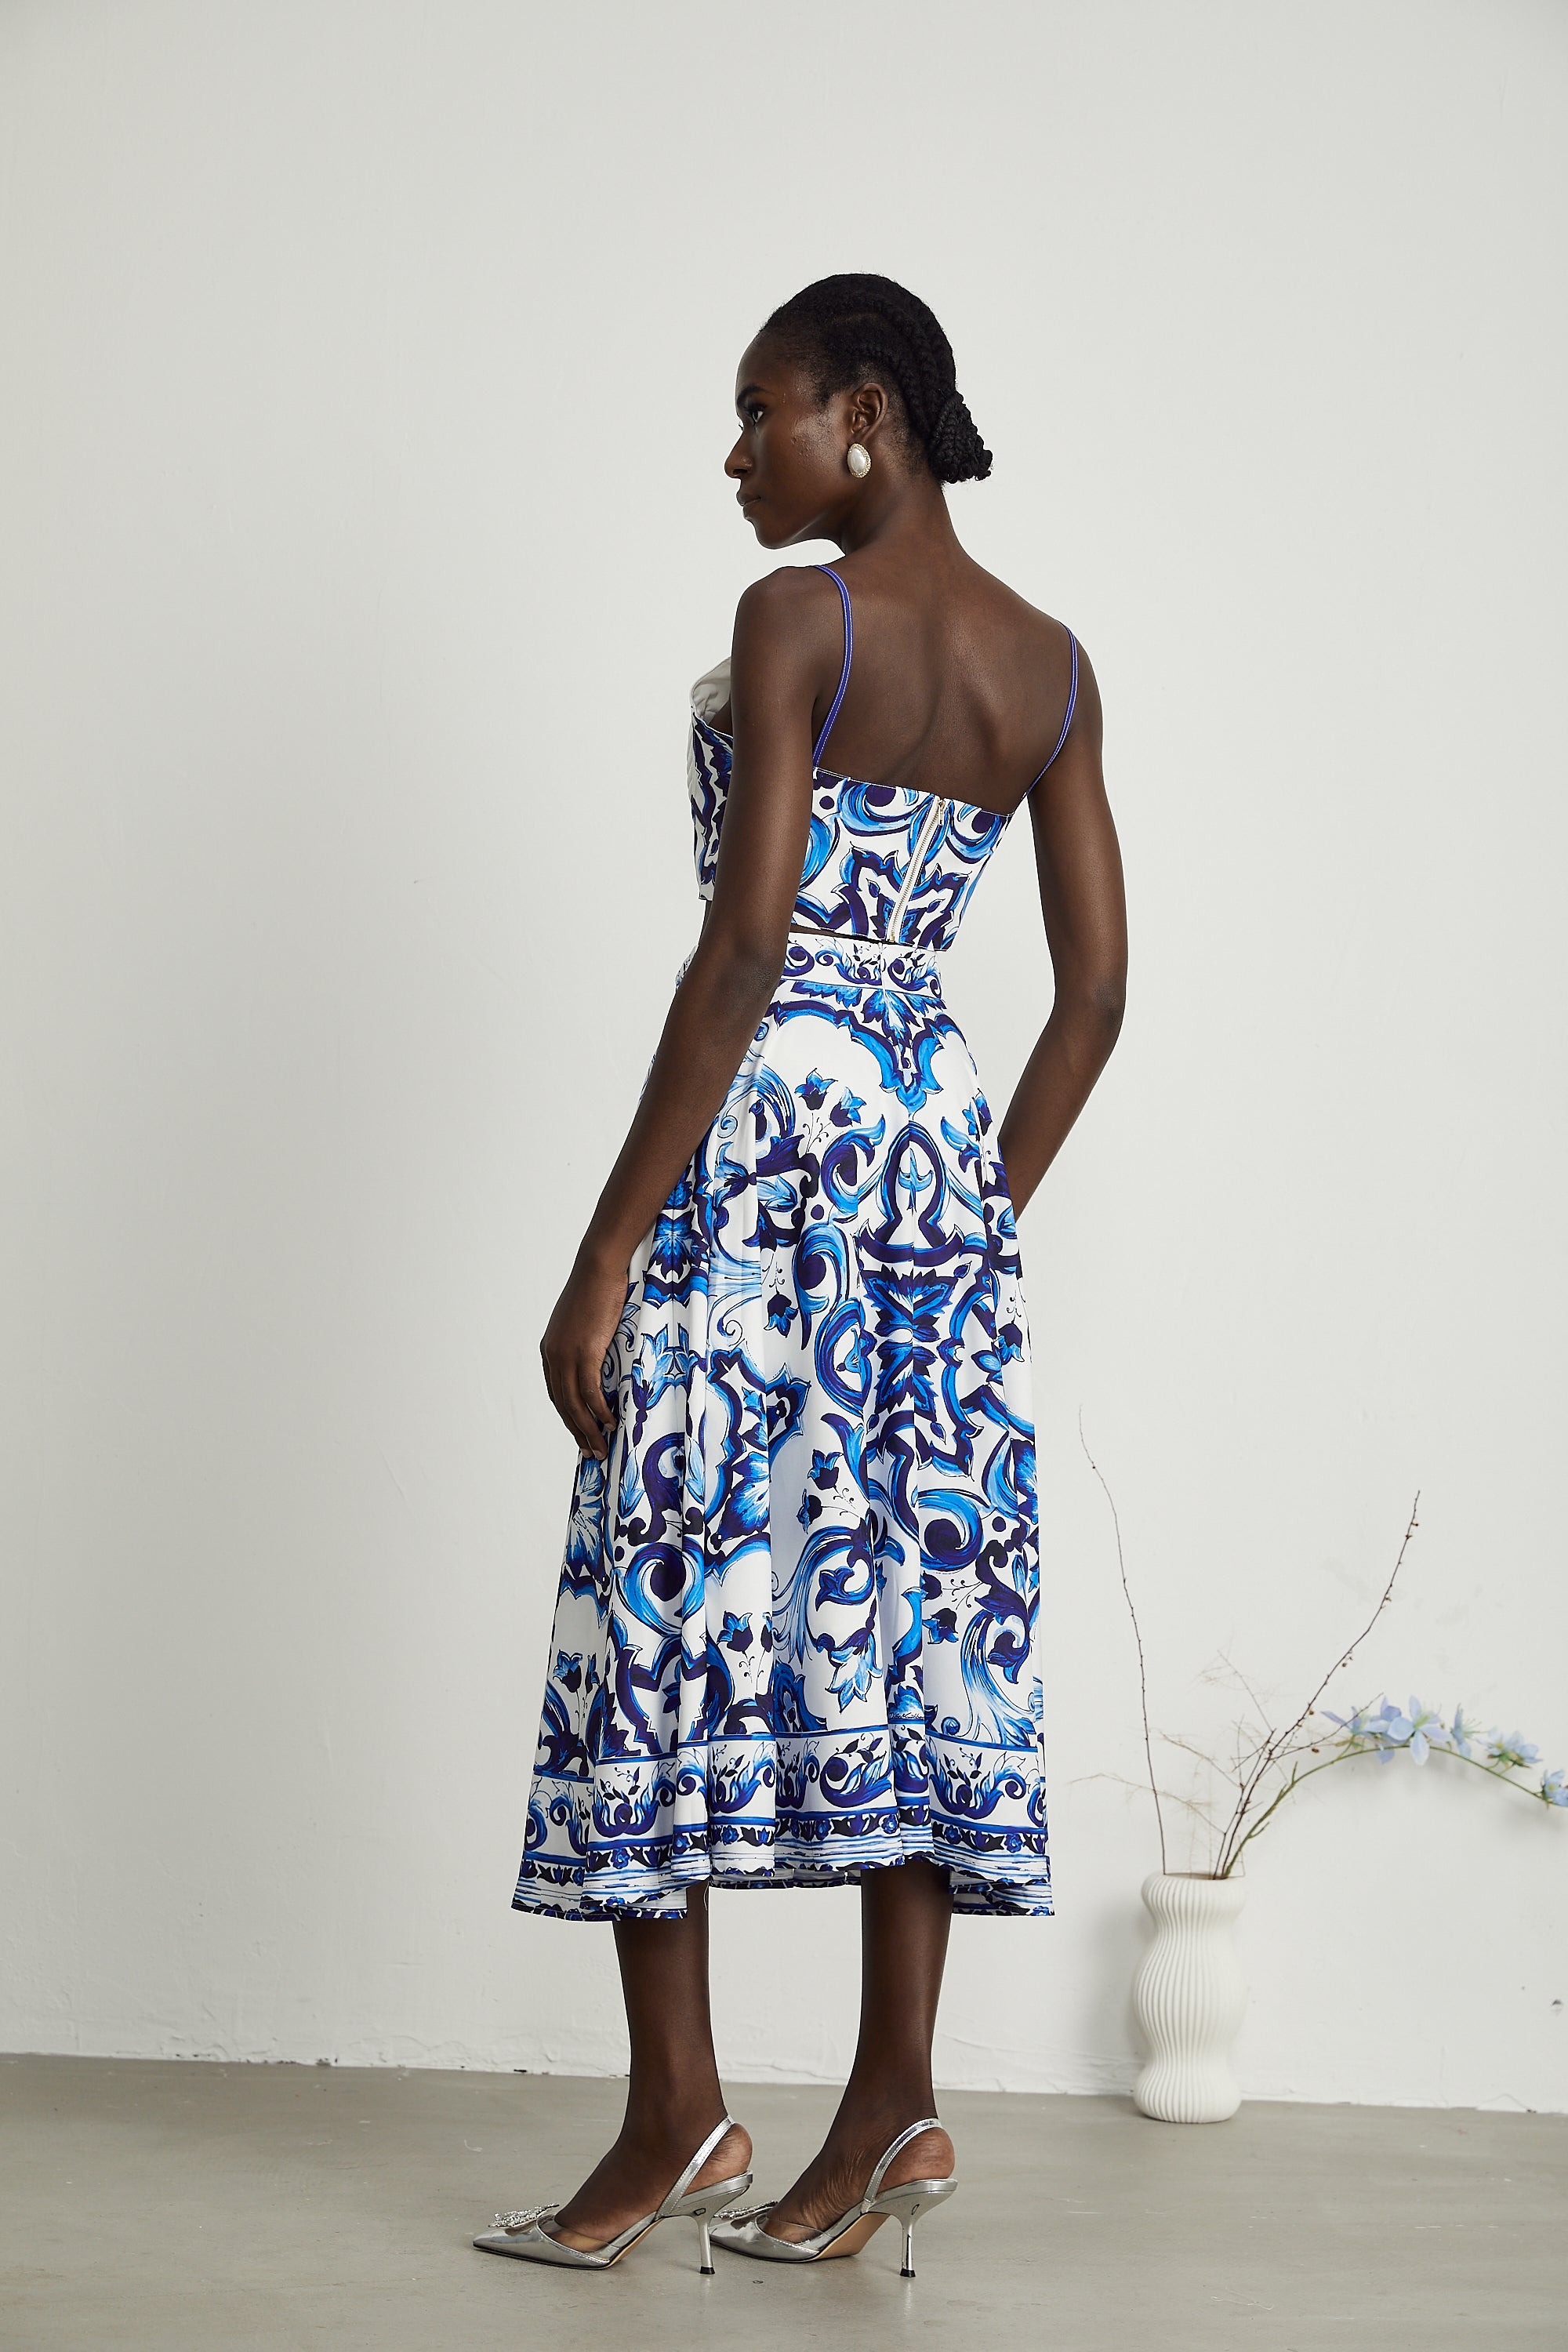 Allegra graphic-print top & skirt matching set